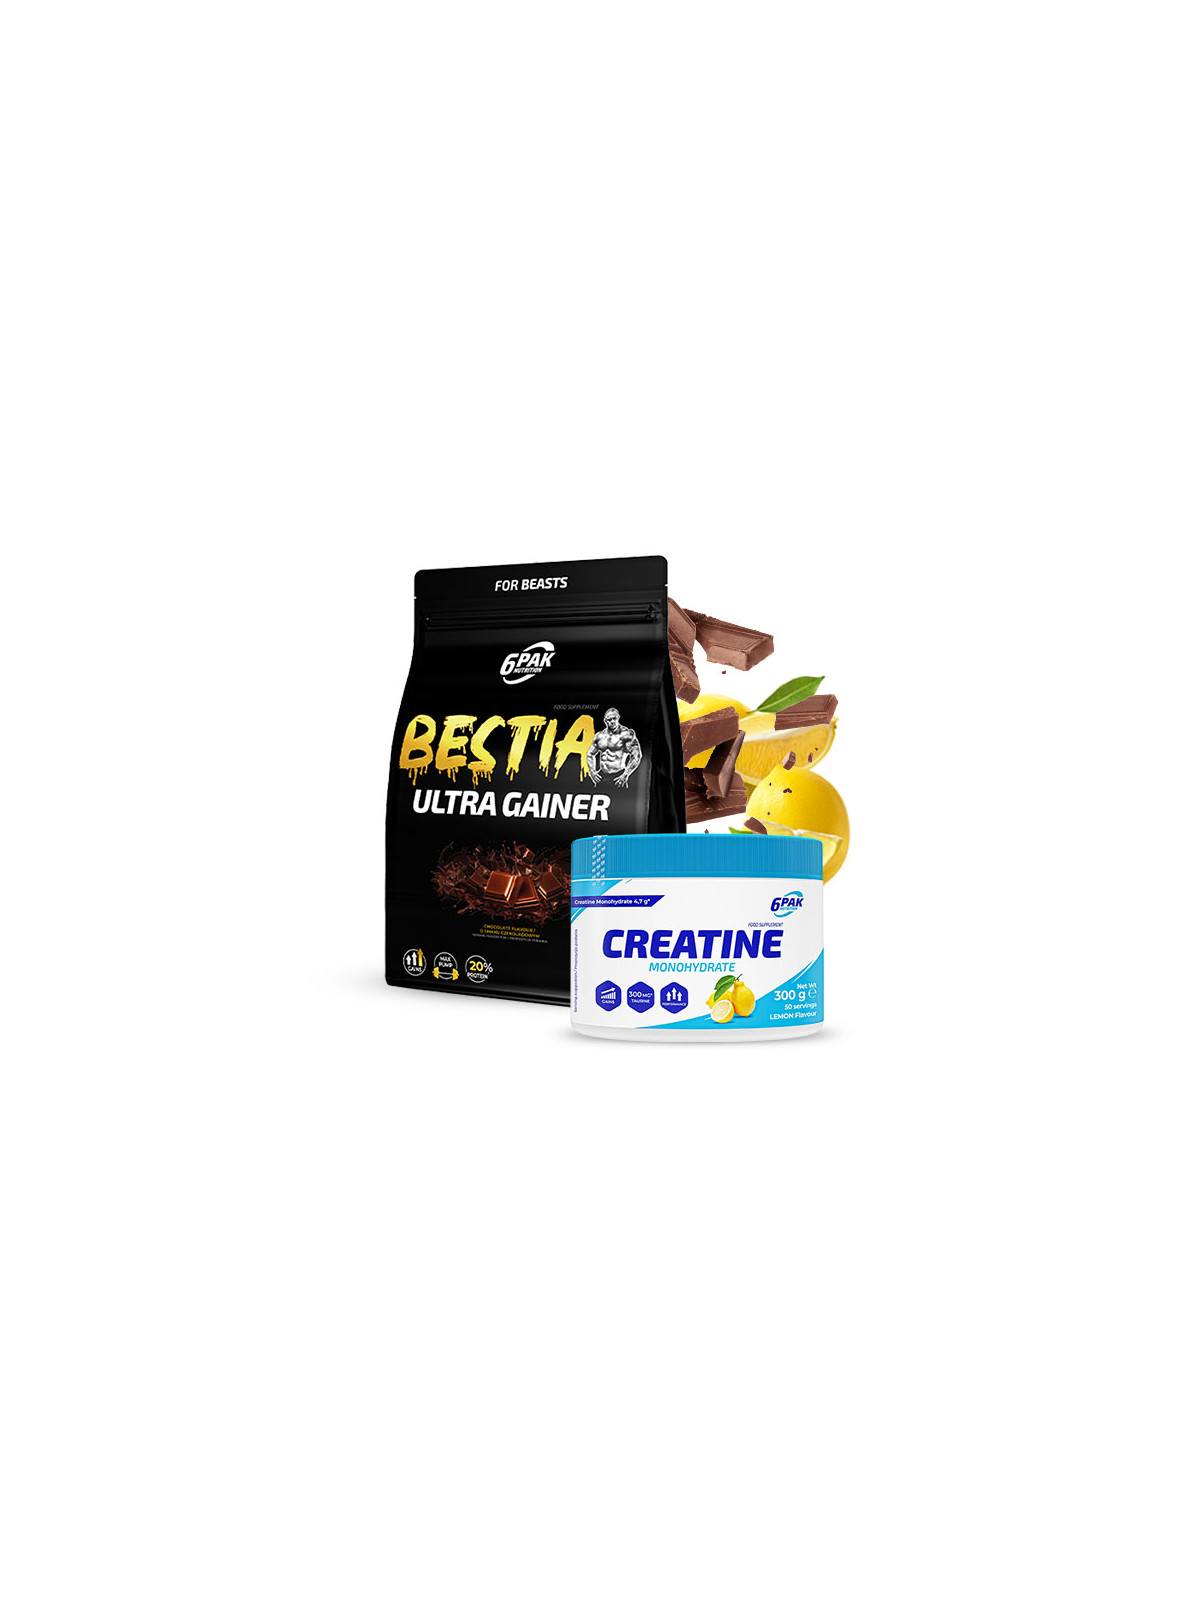 BESTIA Ultra Gainer - 3000g + Creatine Monohydrate - 300g